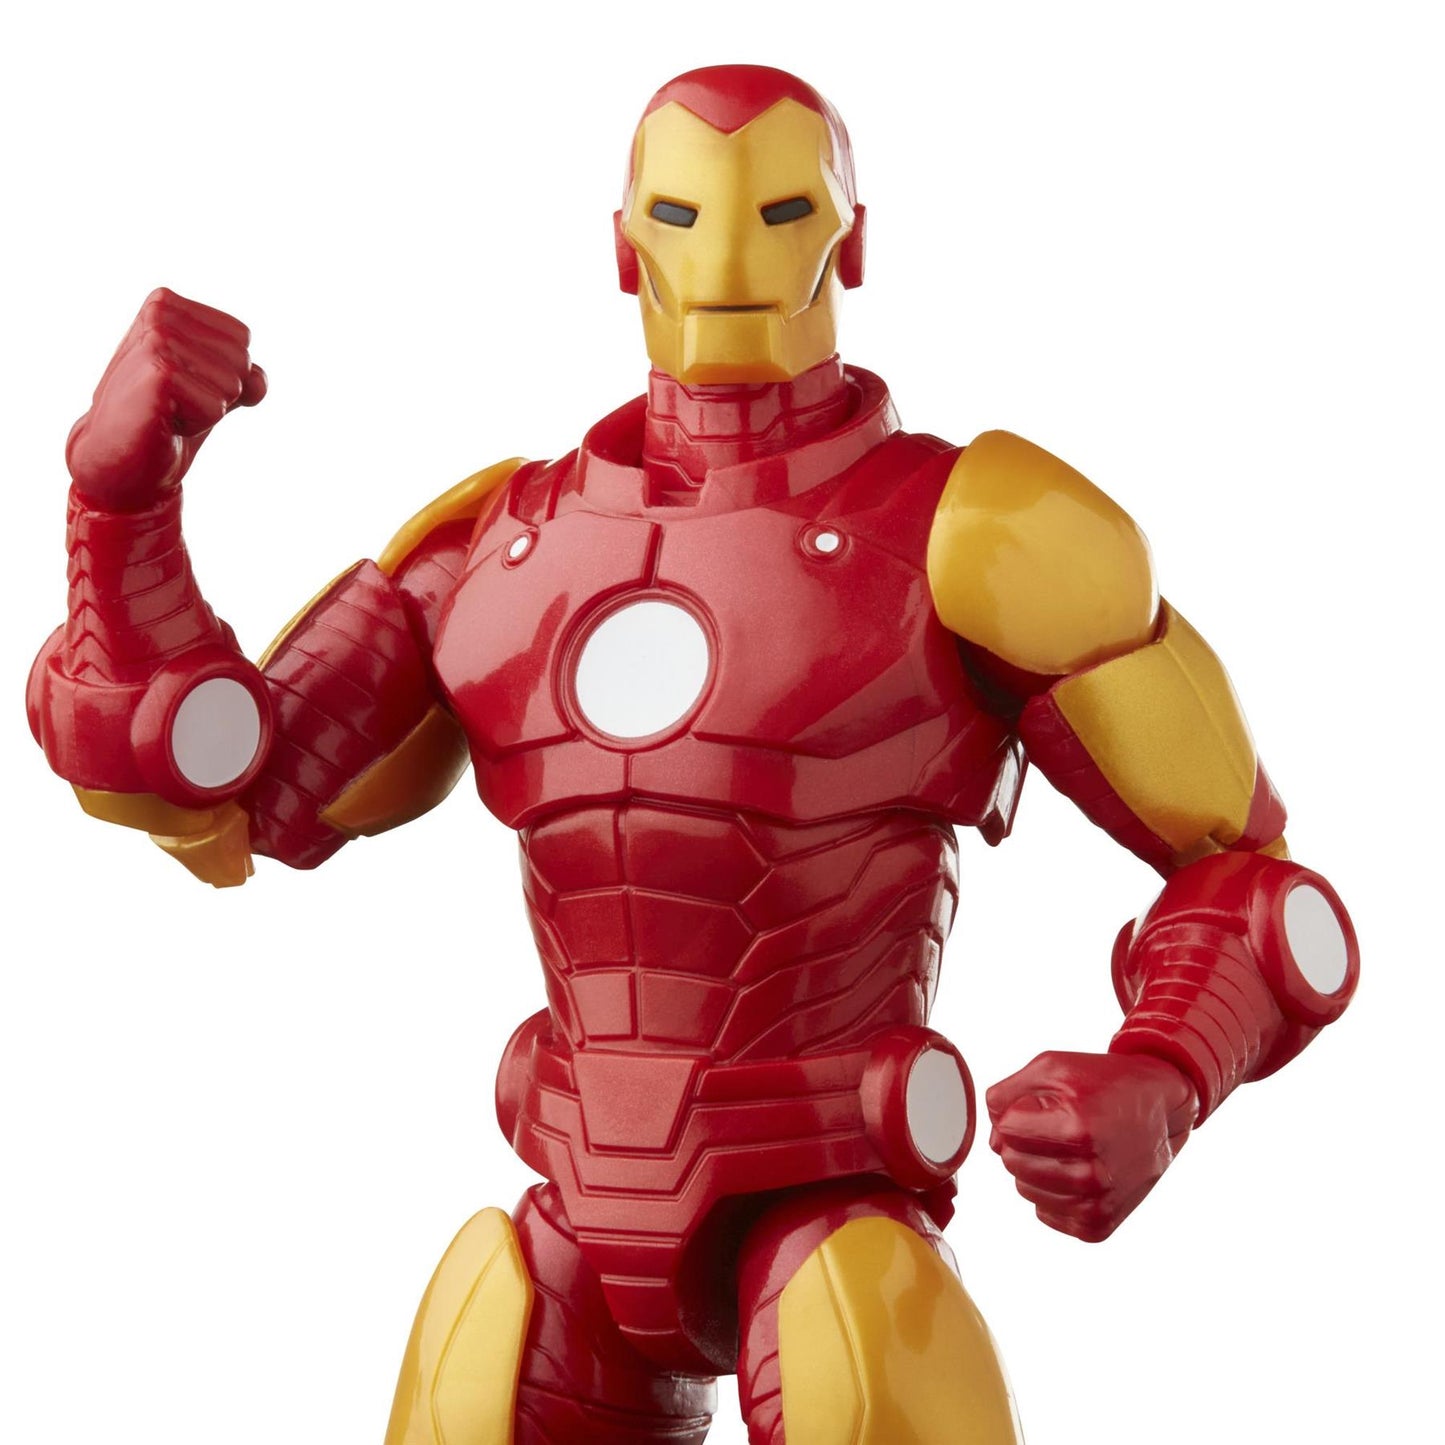 IRON MAN Action Figure Build-A-Figure F47900 Marvel Toys Legends Series